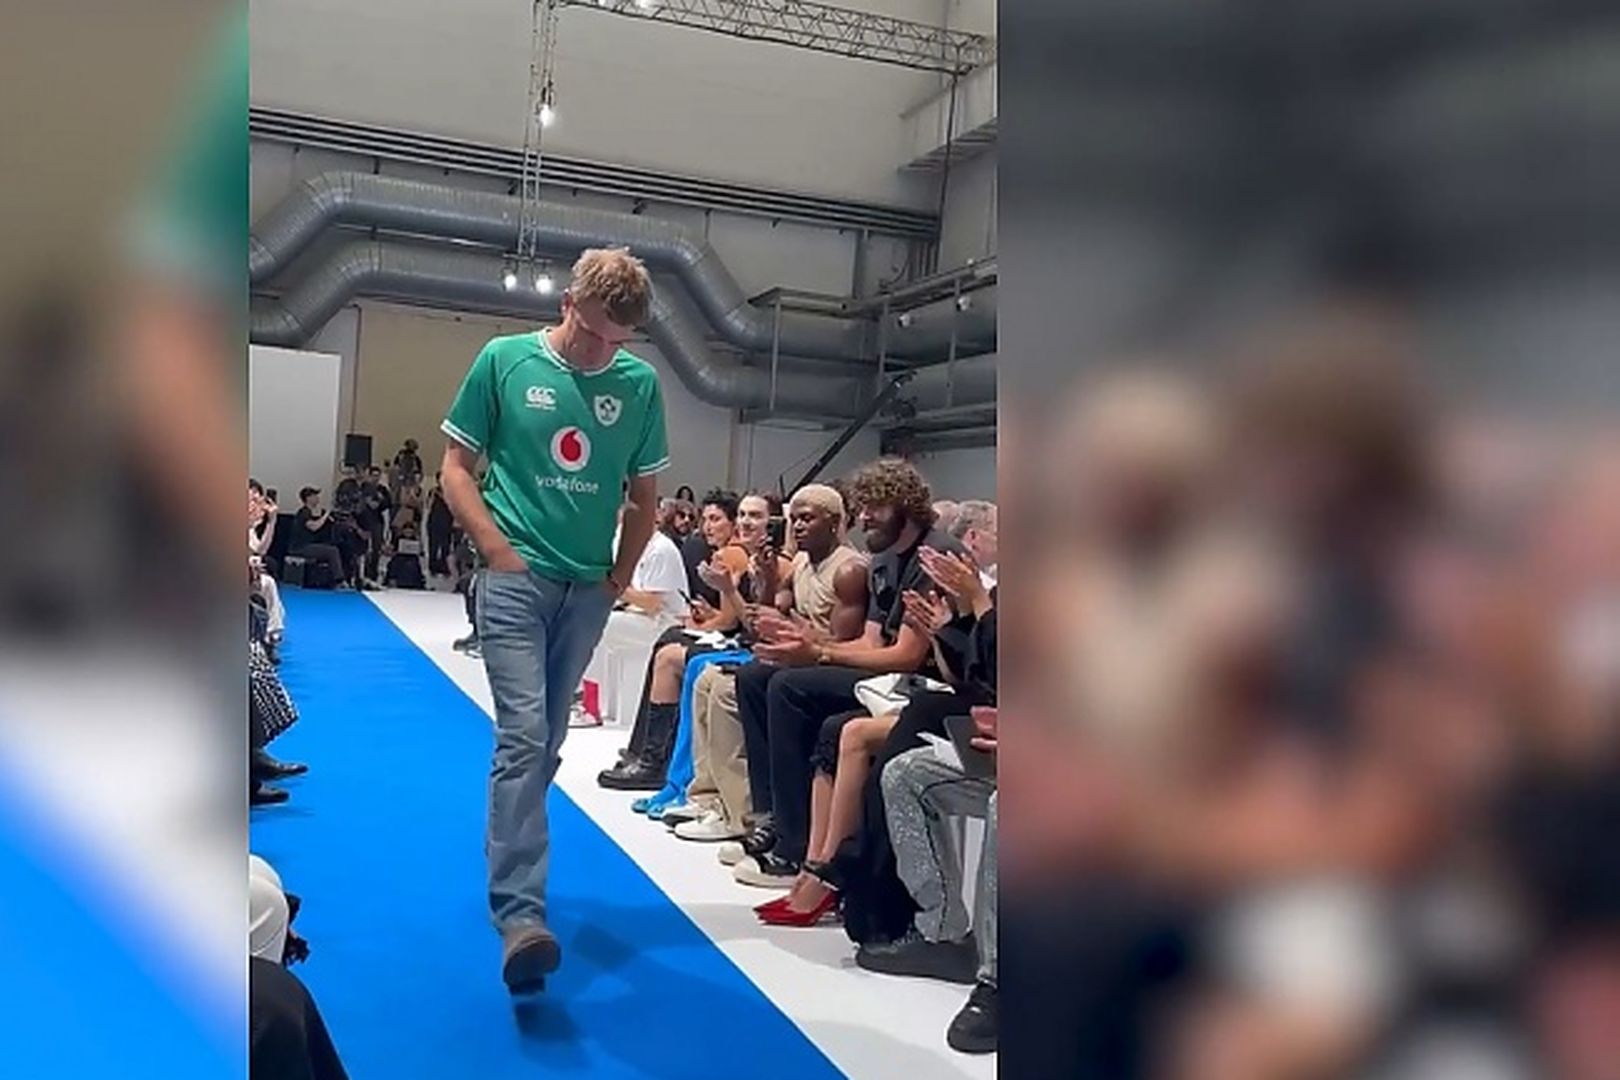 Designer JW Anderson wears Irish rugby top on the runway